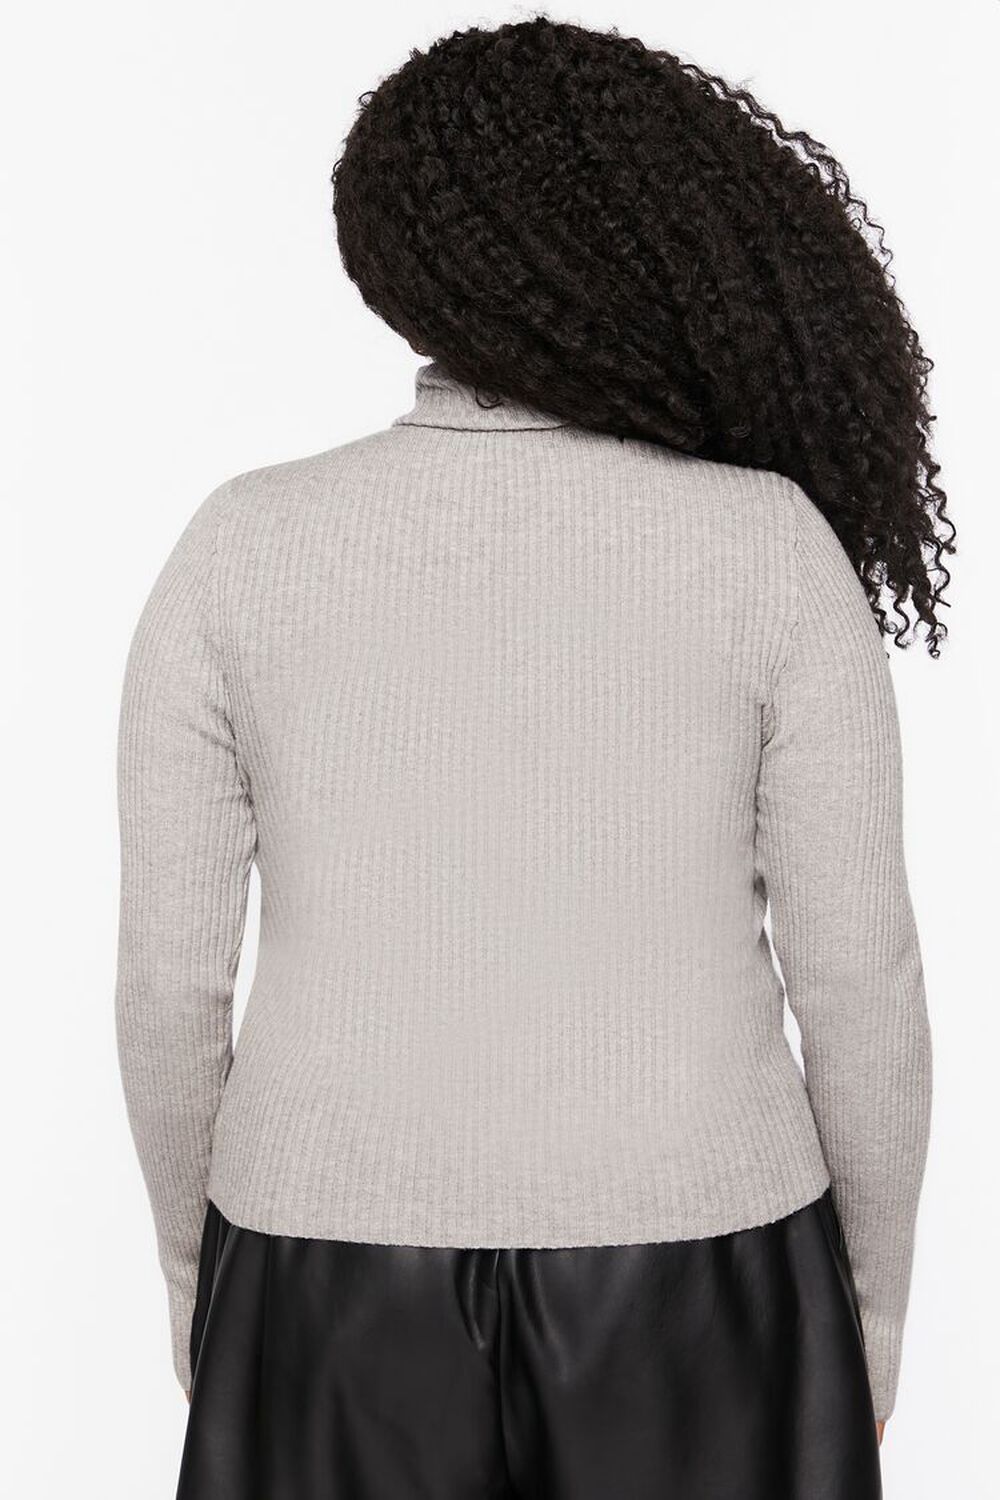 HEATHER GREY Plus Size Sweater-Knit Turtleneck Top, image 3